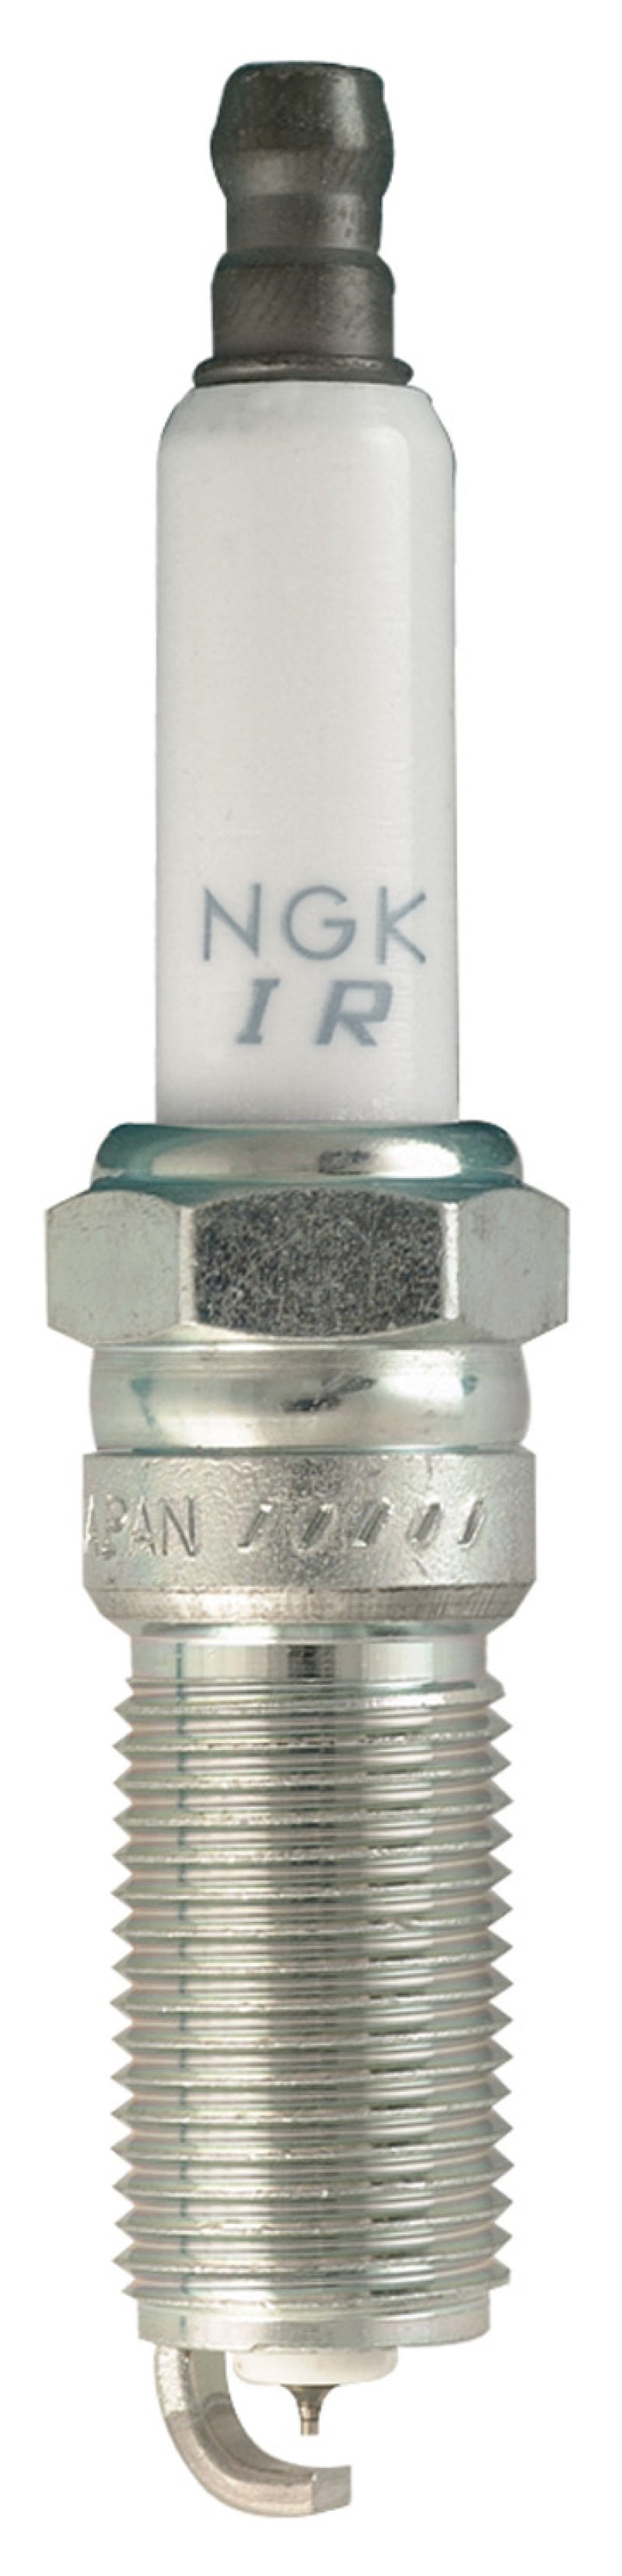 NGK Iridium/Platinum Spark Plug Box of 4 (ILTR5E11).